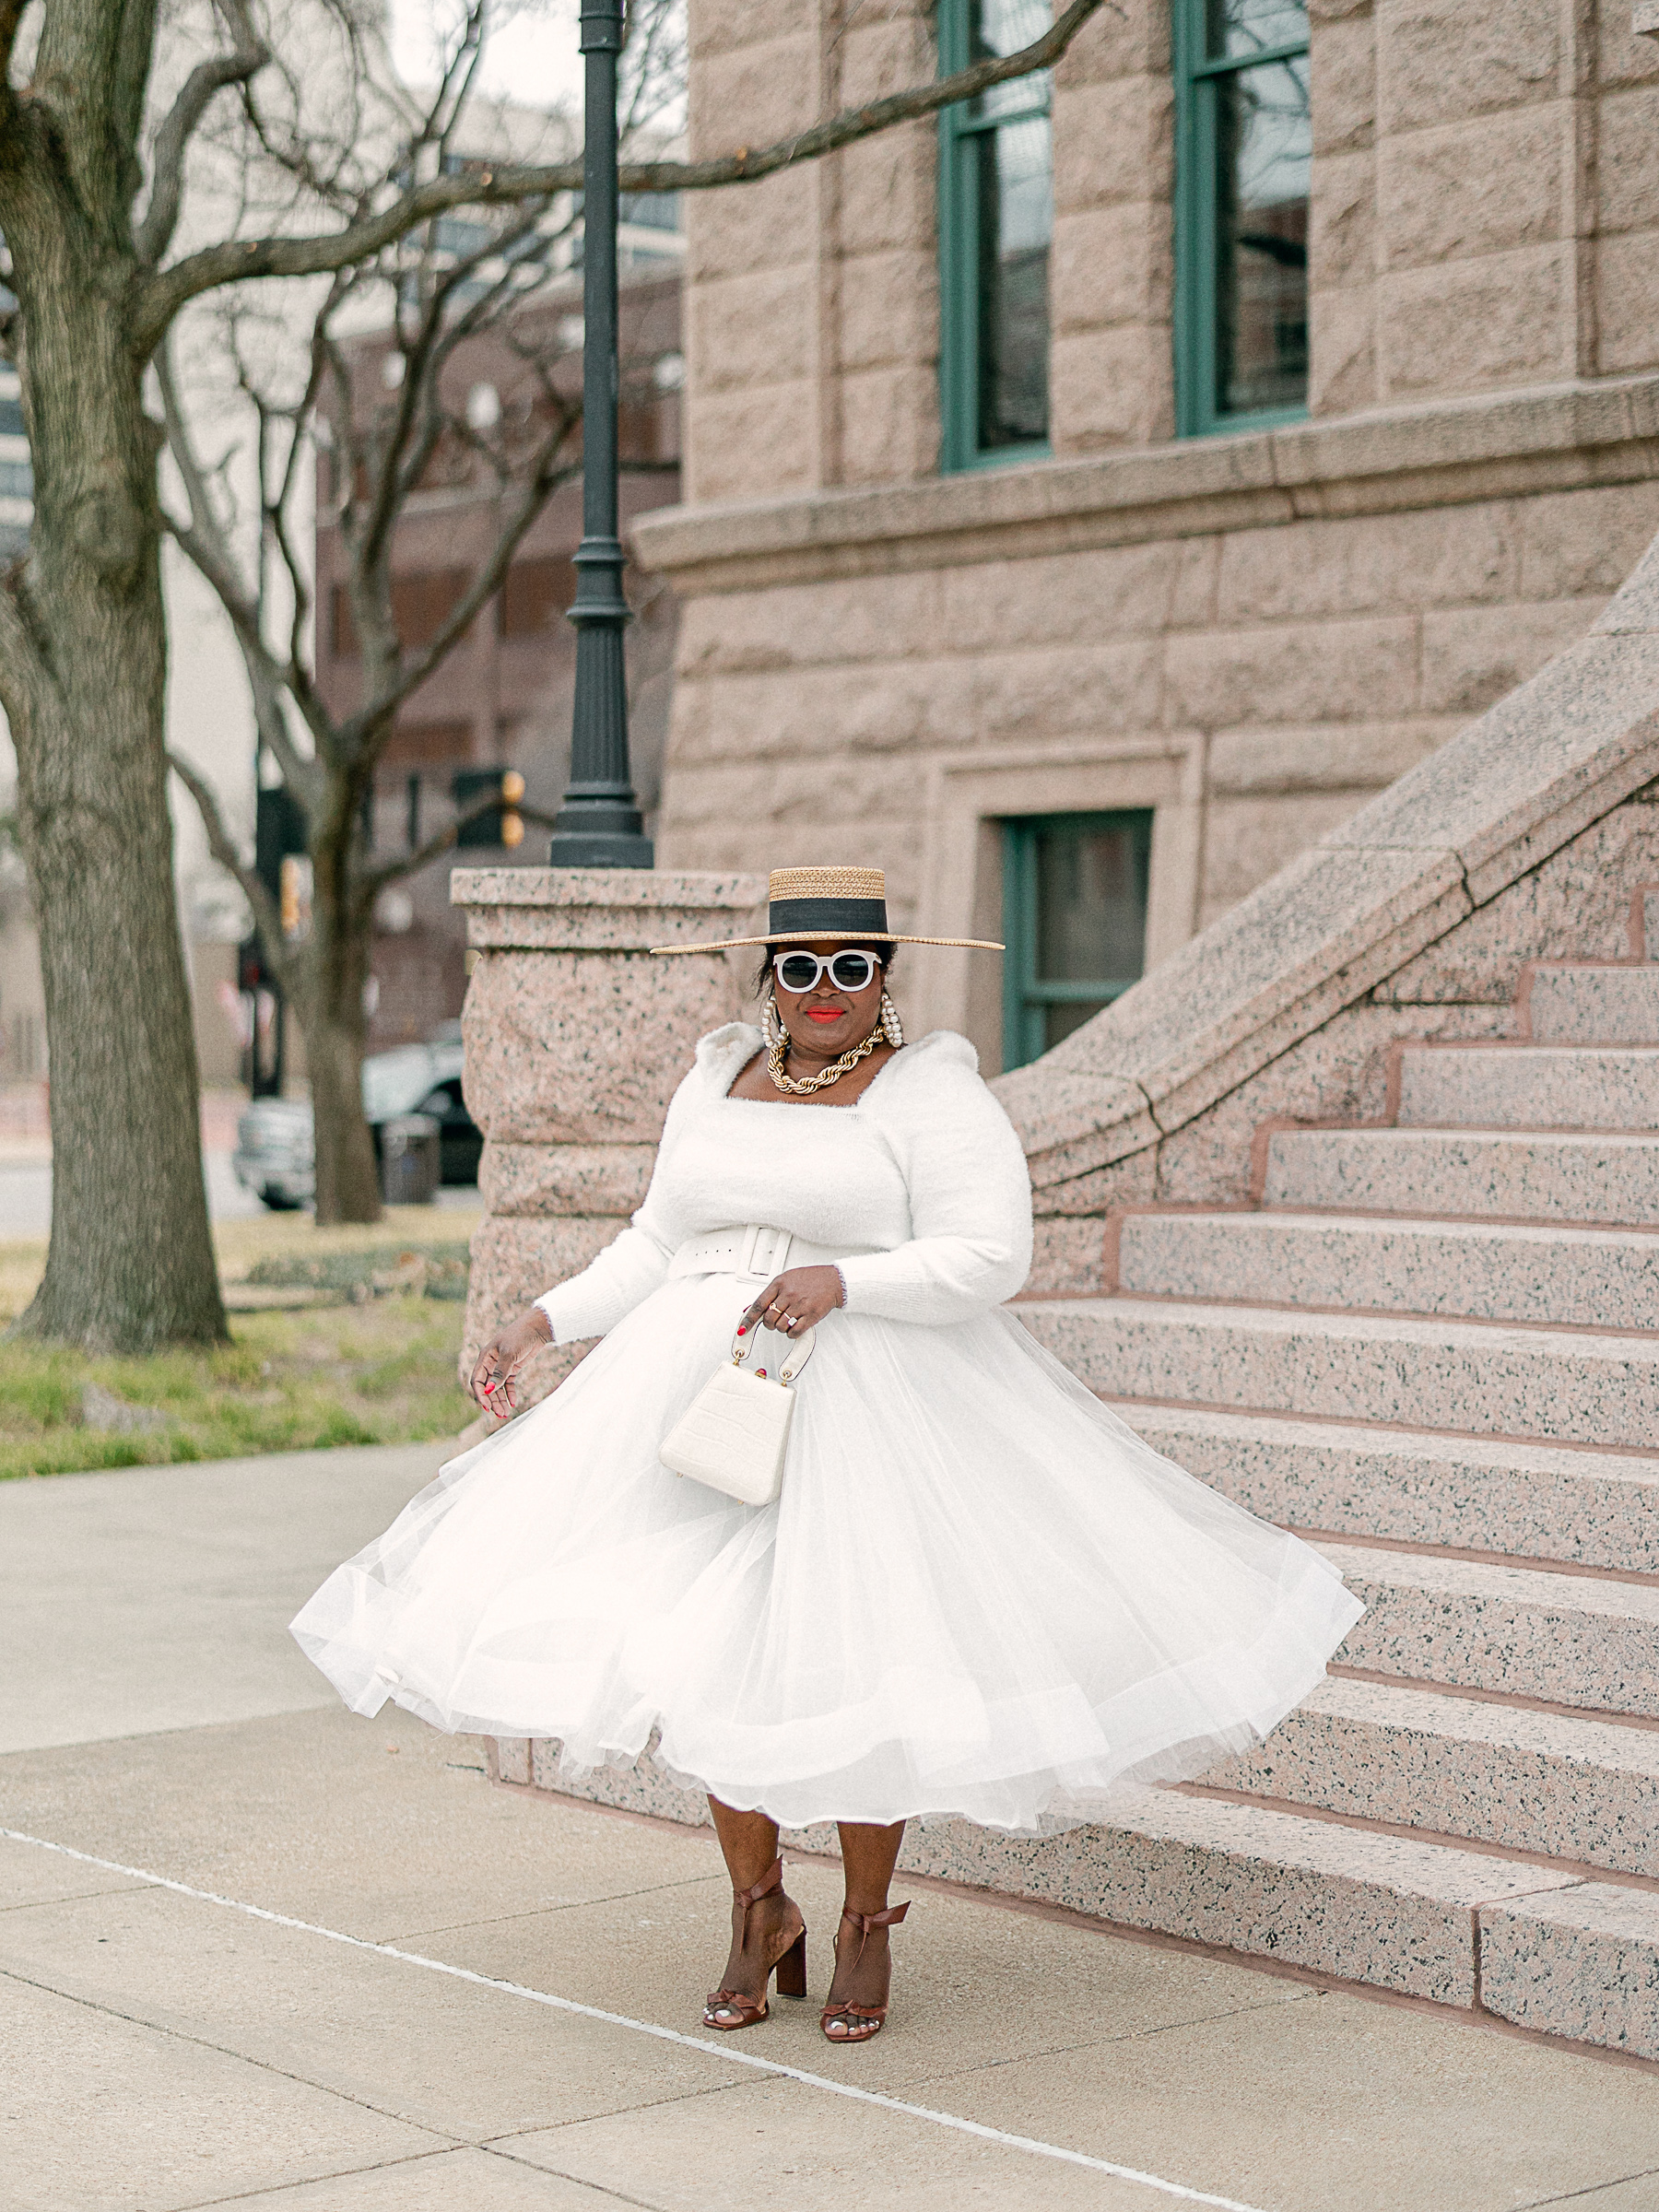 Alexandre Birman Clarita Sandals - White Tulle Skirt wedding inspiration